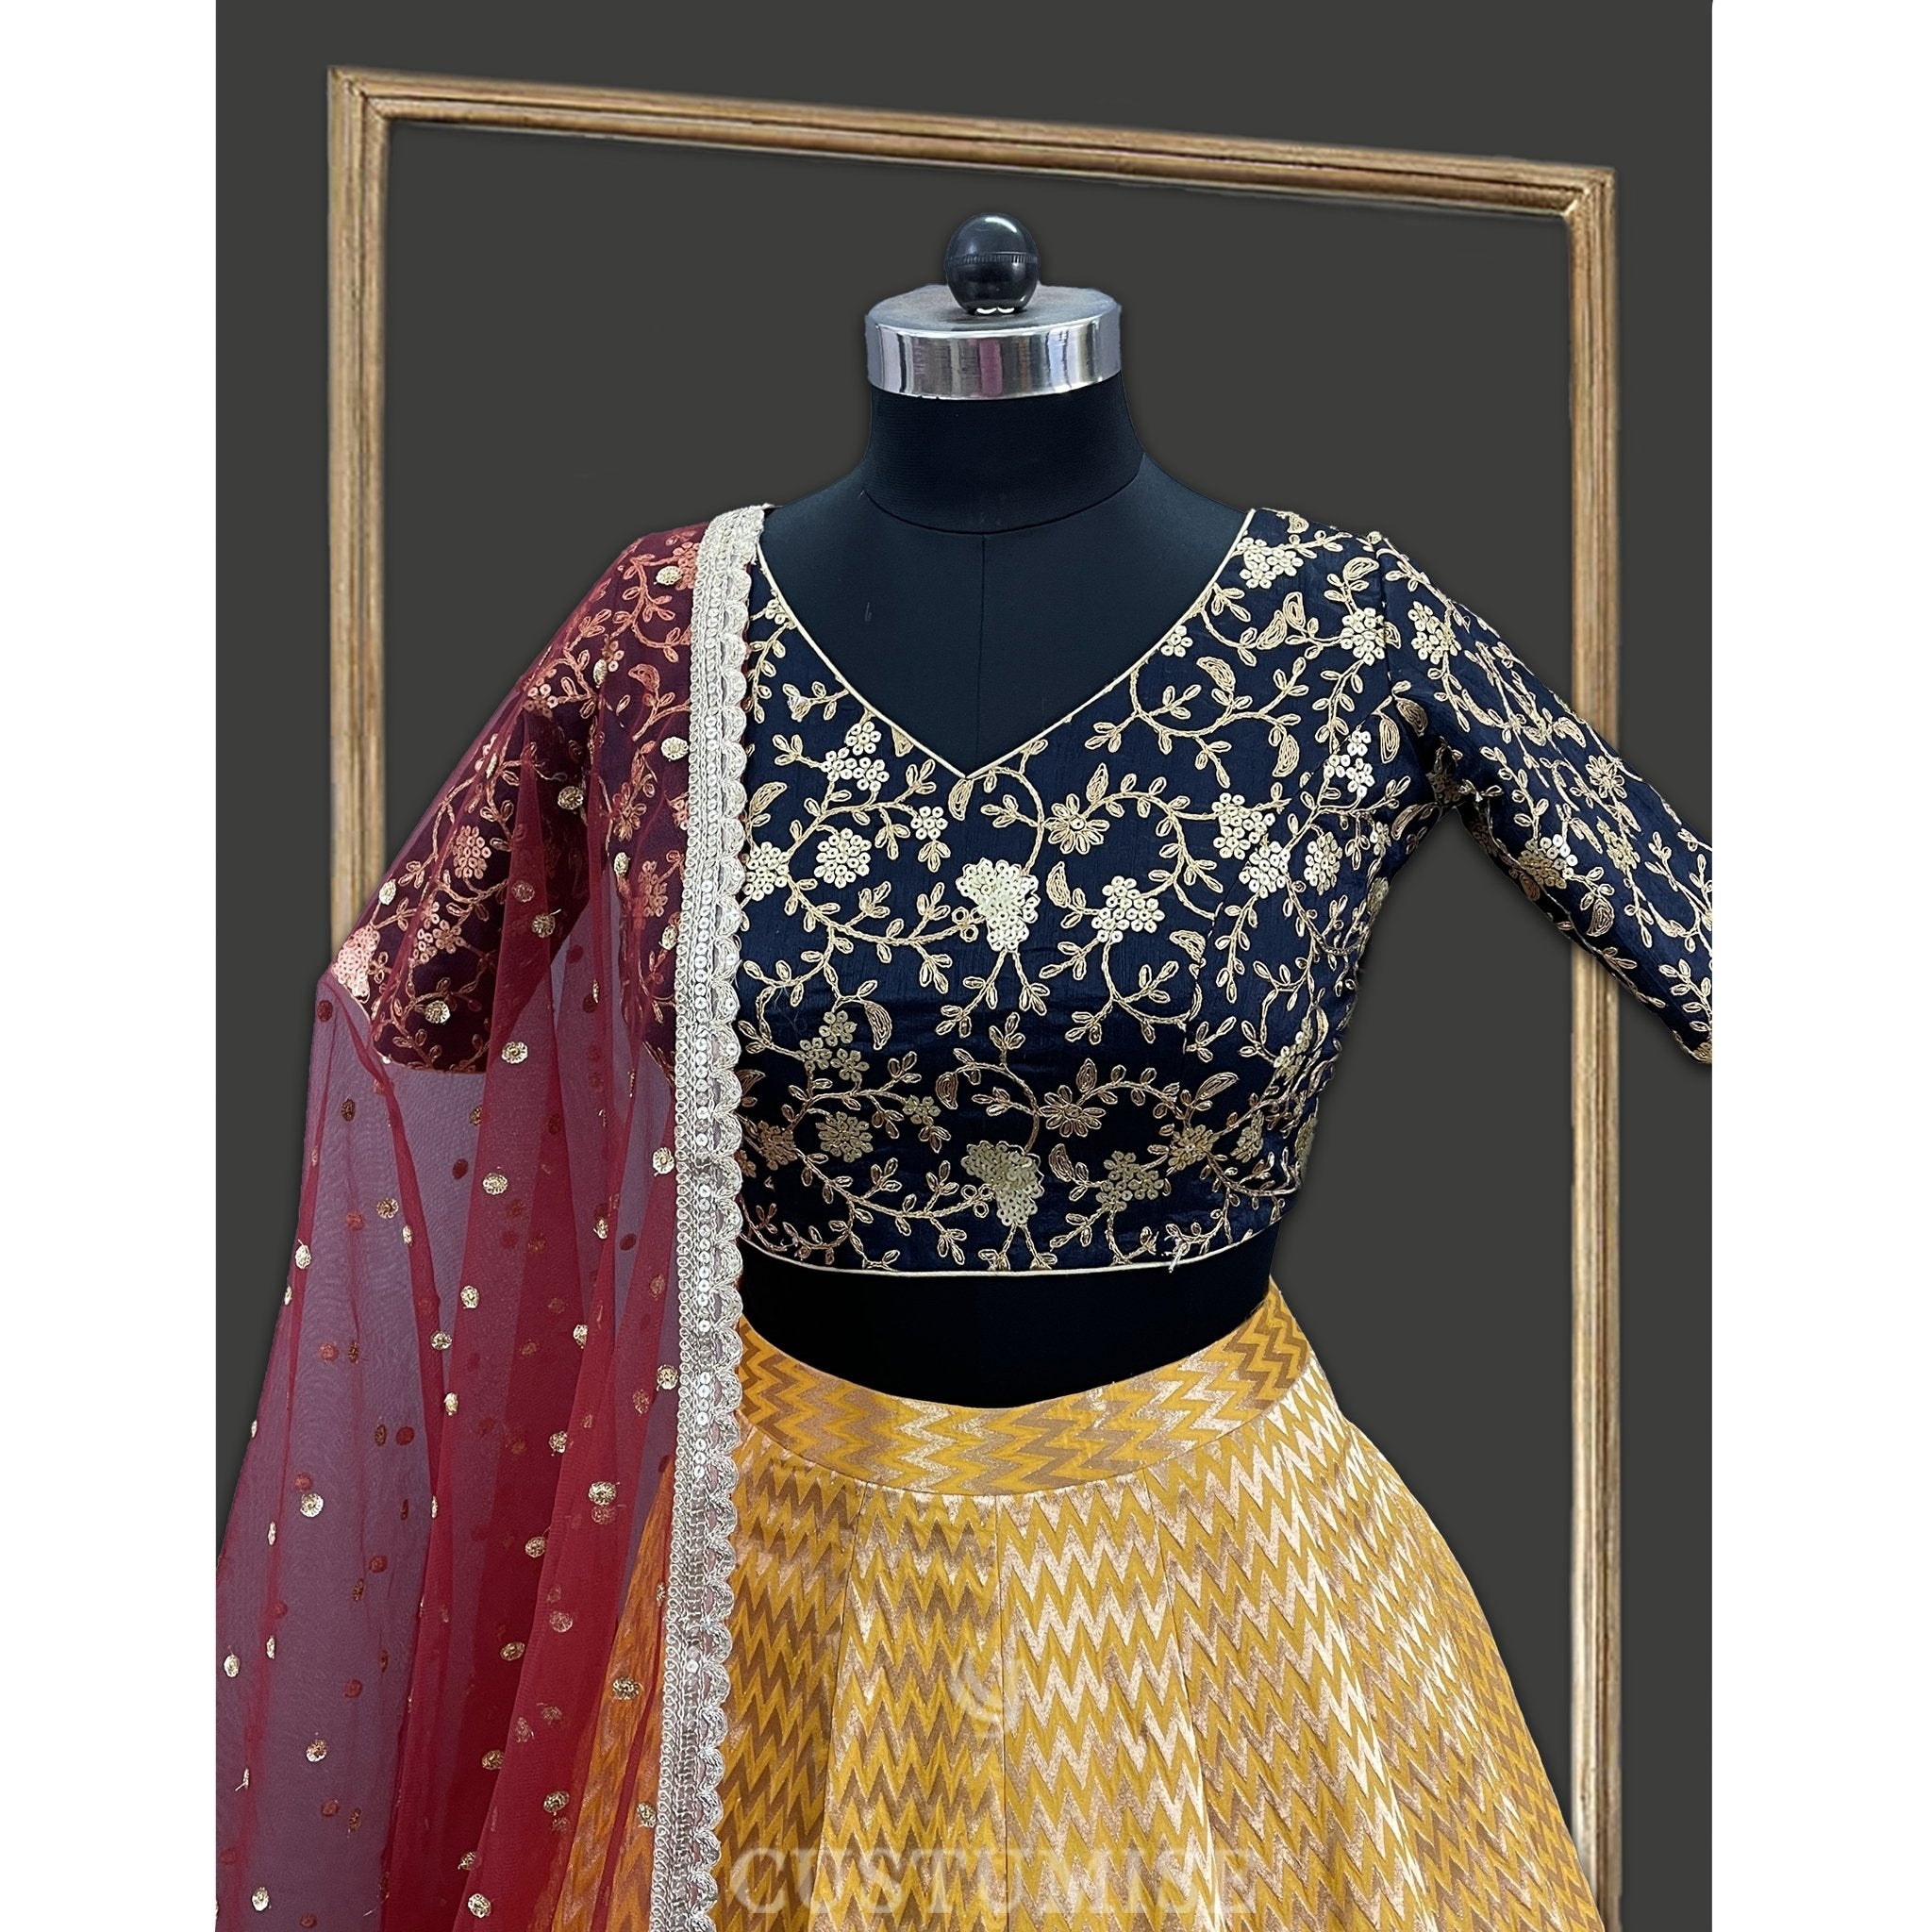 Radiant Yellow Chevron Banarsi Lehenga - Indian Designer Bridal Wedding Outfit